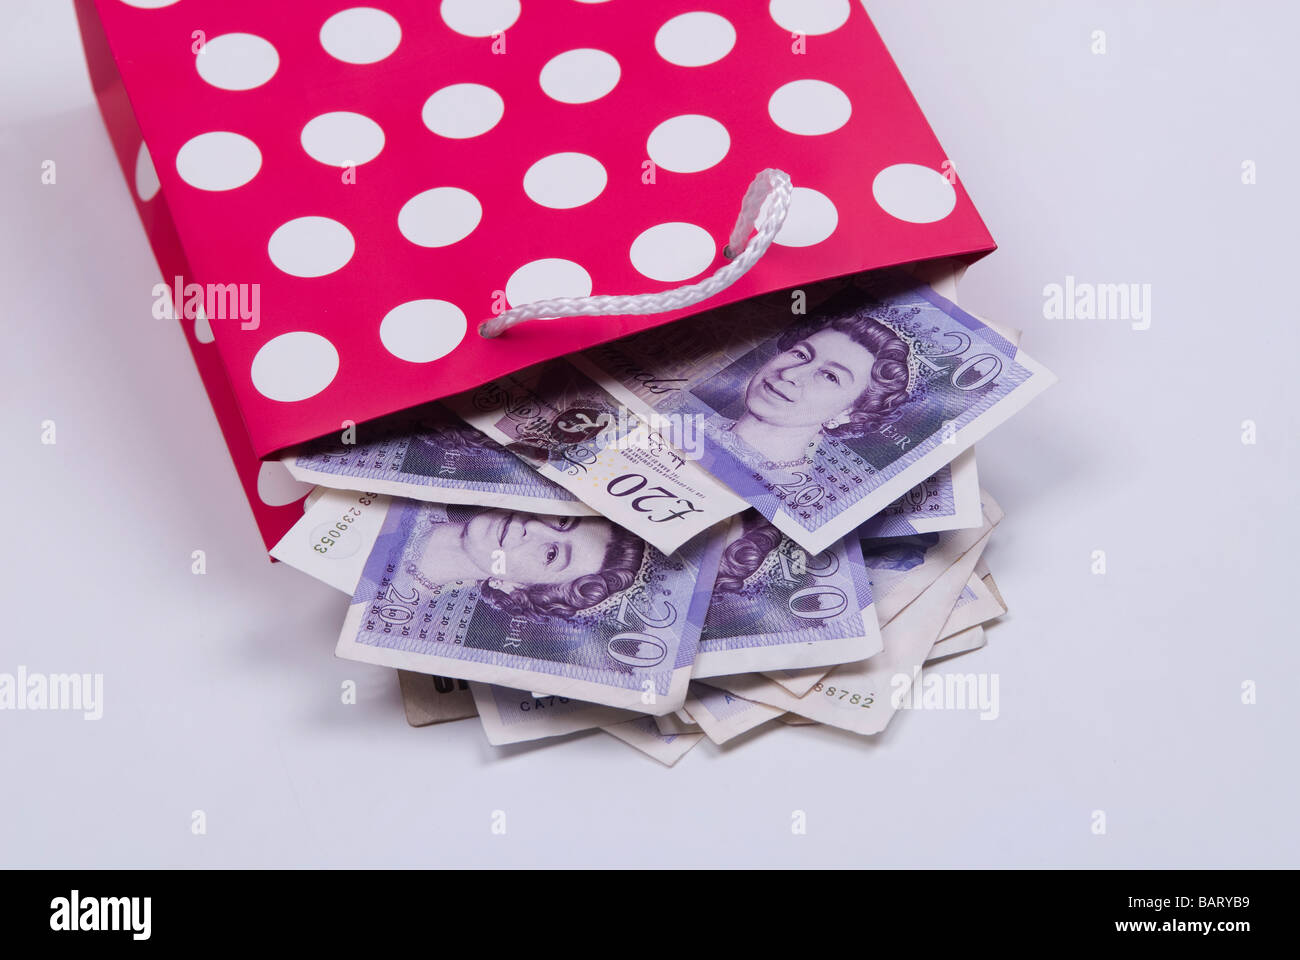 British money inside a shopping bag Stock Photo